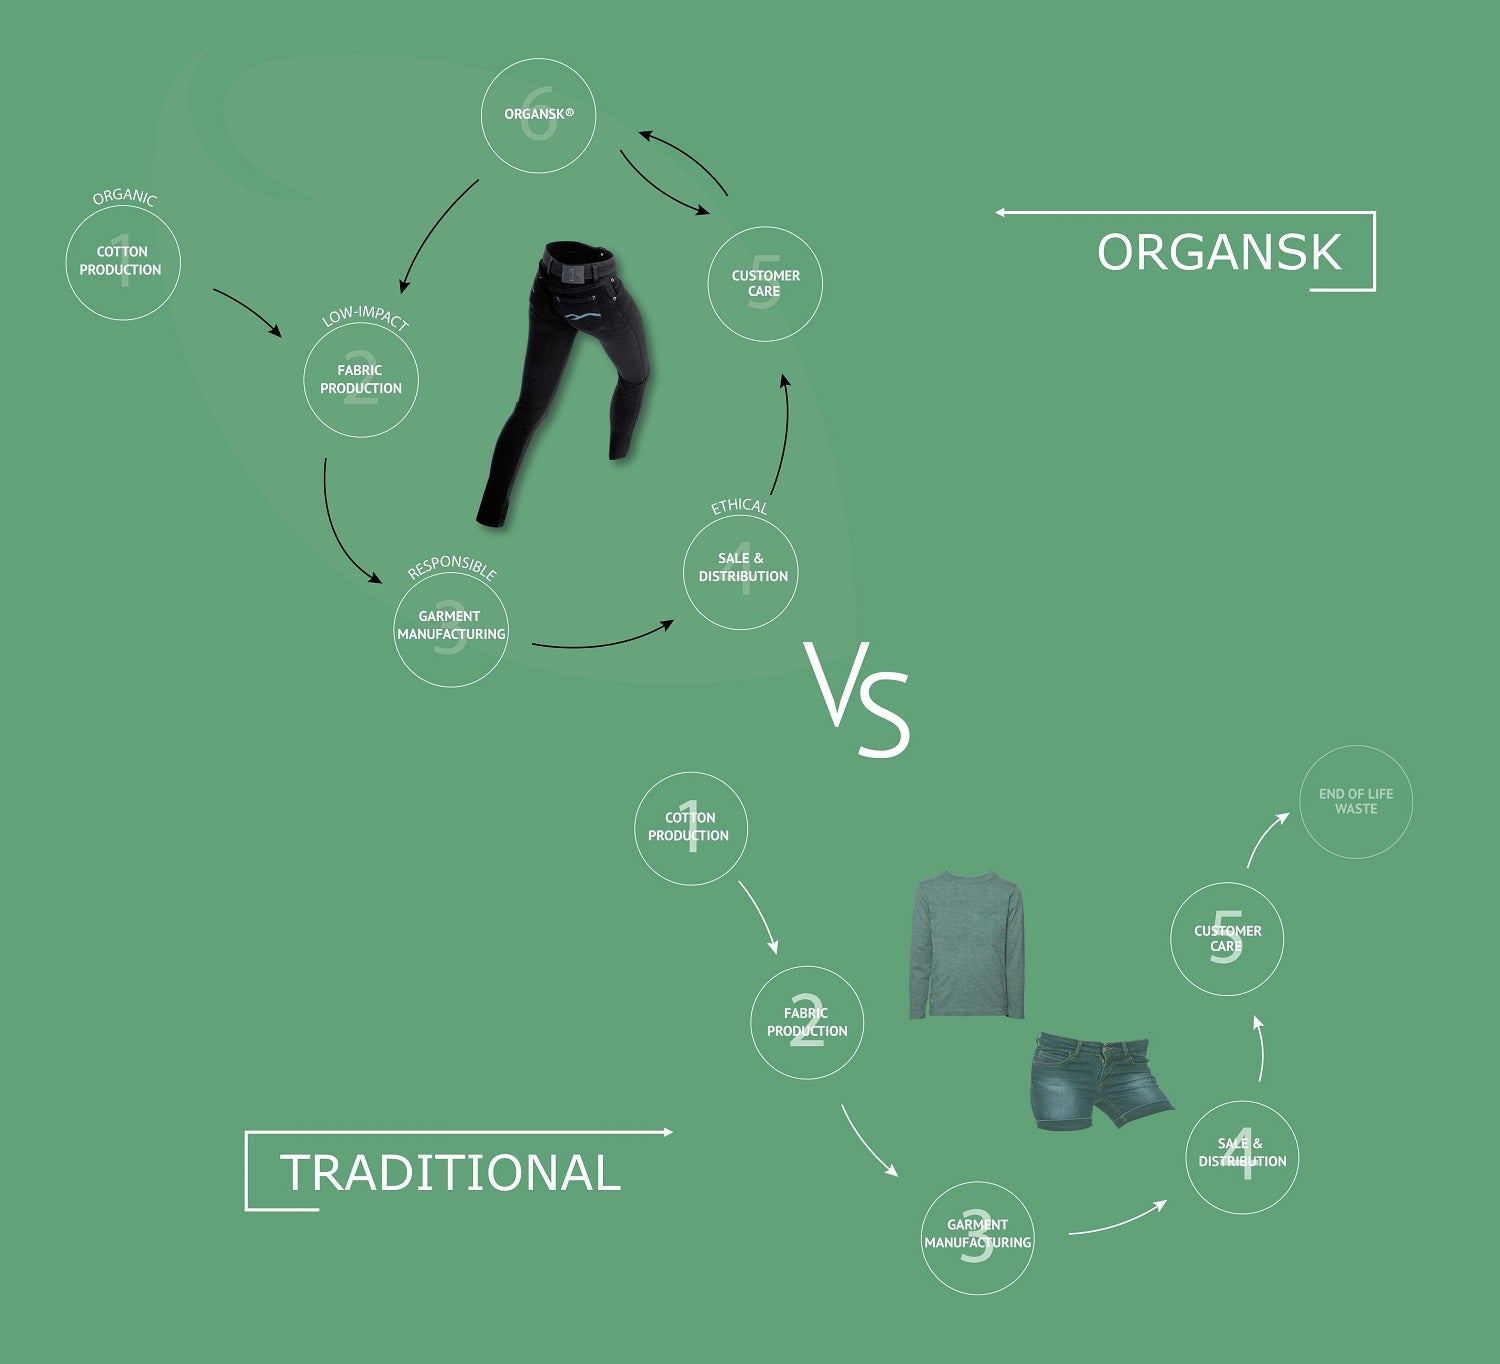 Organsk vs. conventional fashion